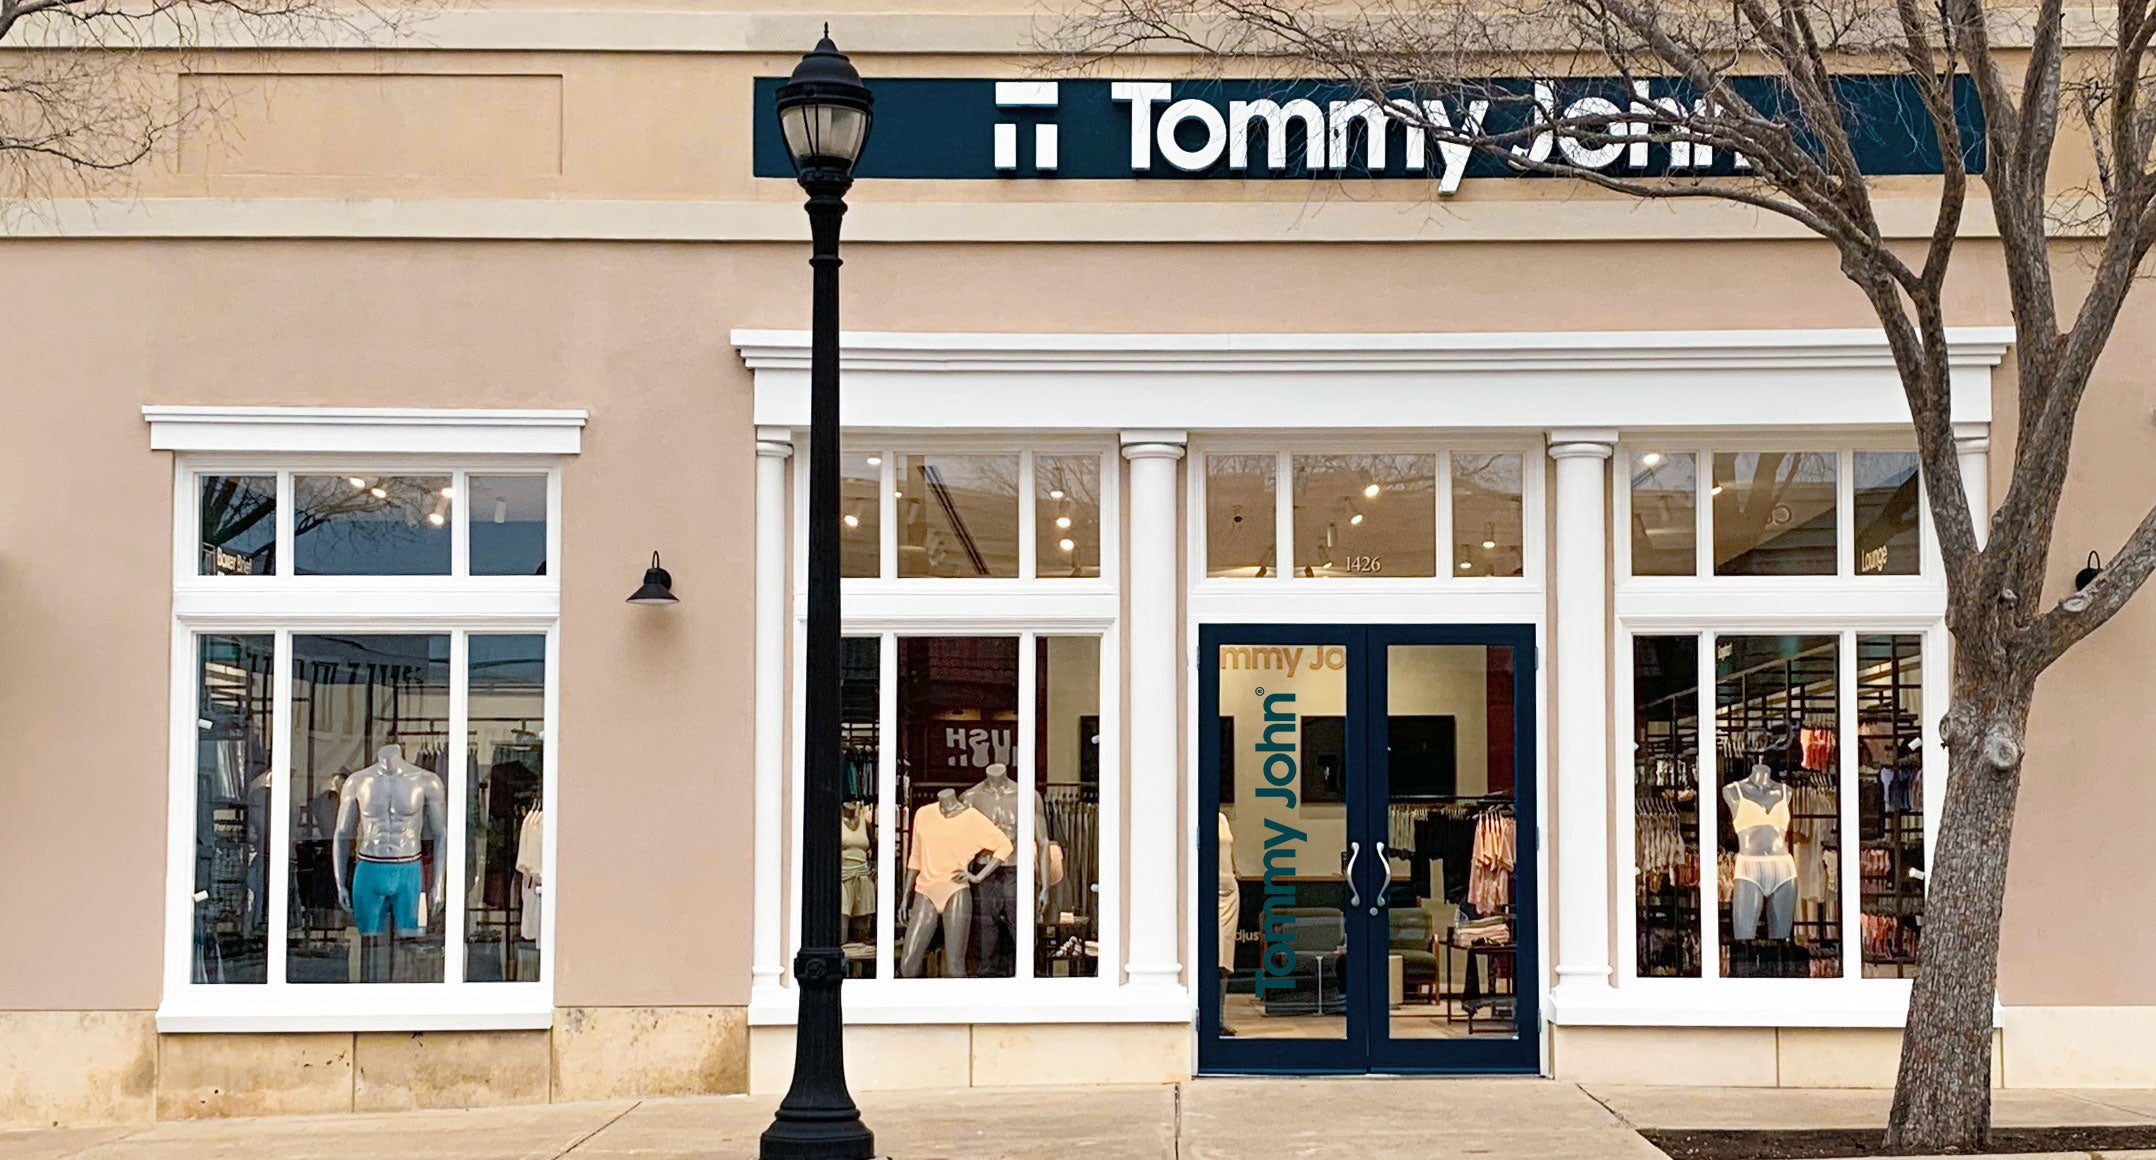 Tommy John Store Near Me 2024